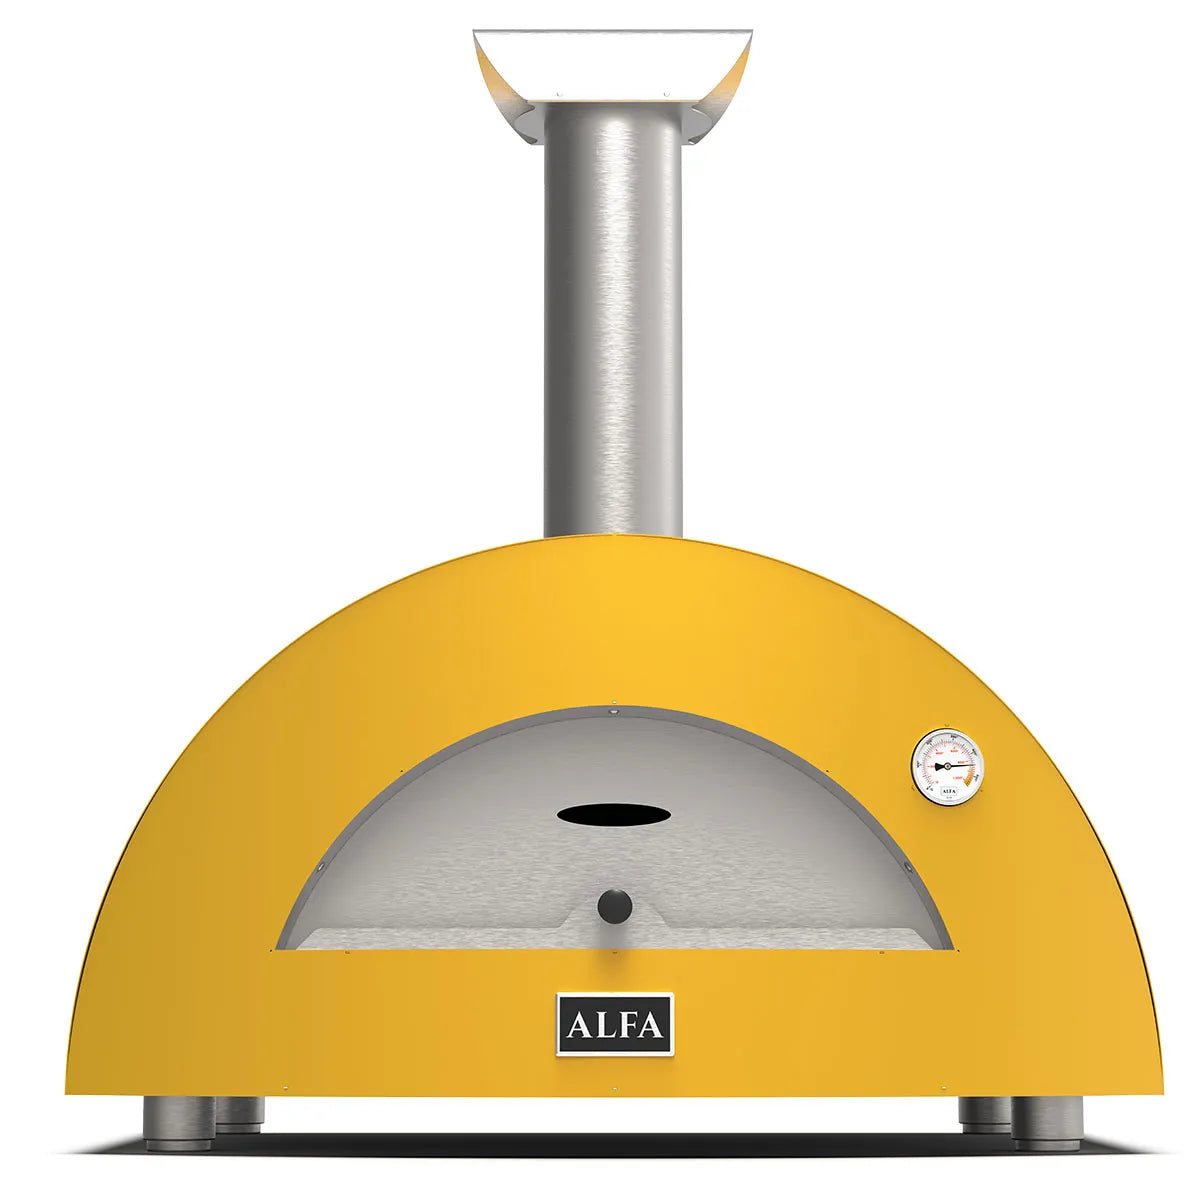 Alfa Moderno 3 Pizze Oven-Yellow